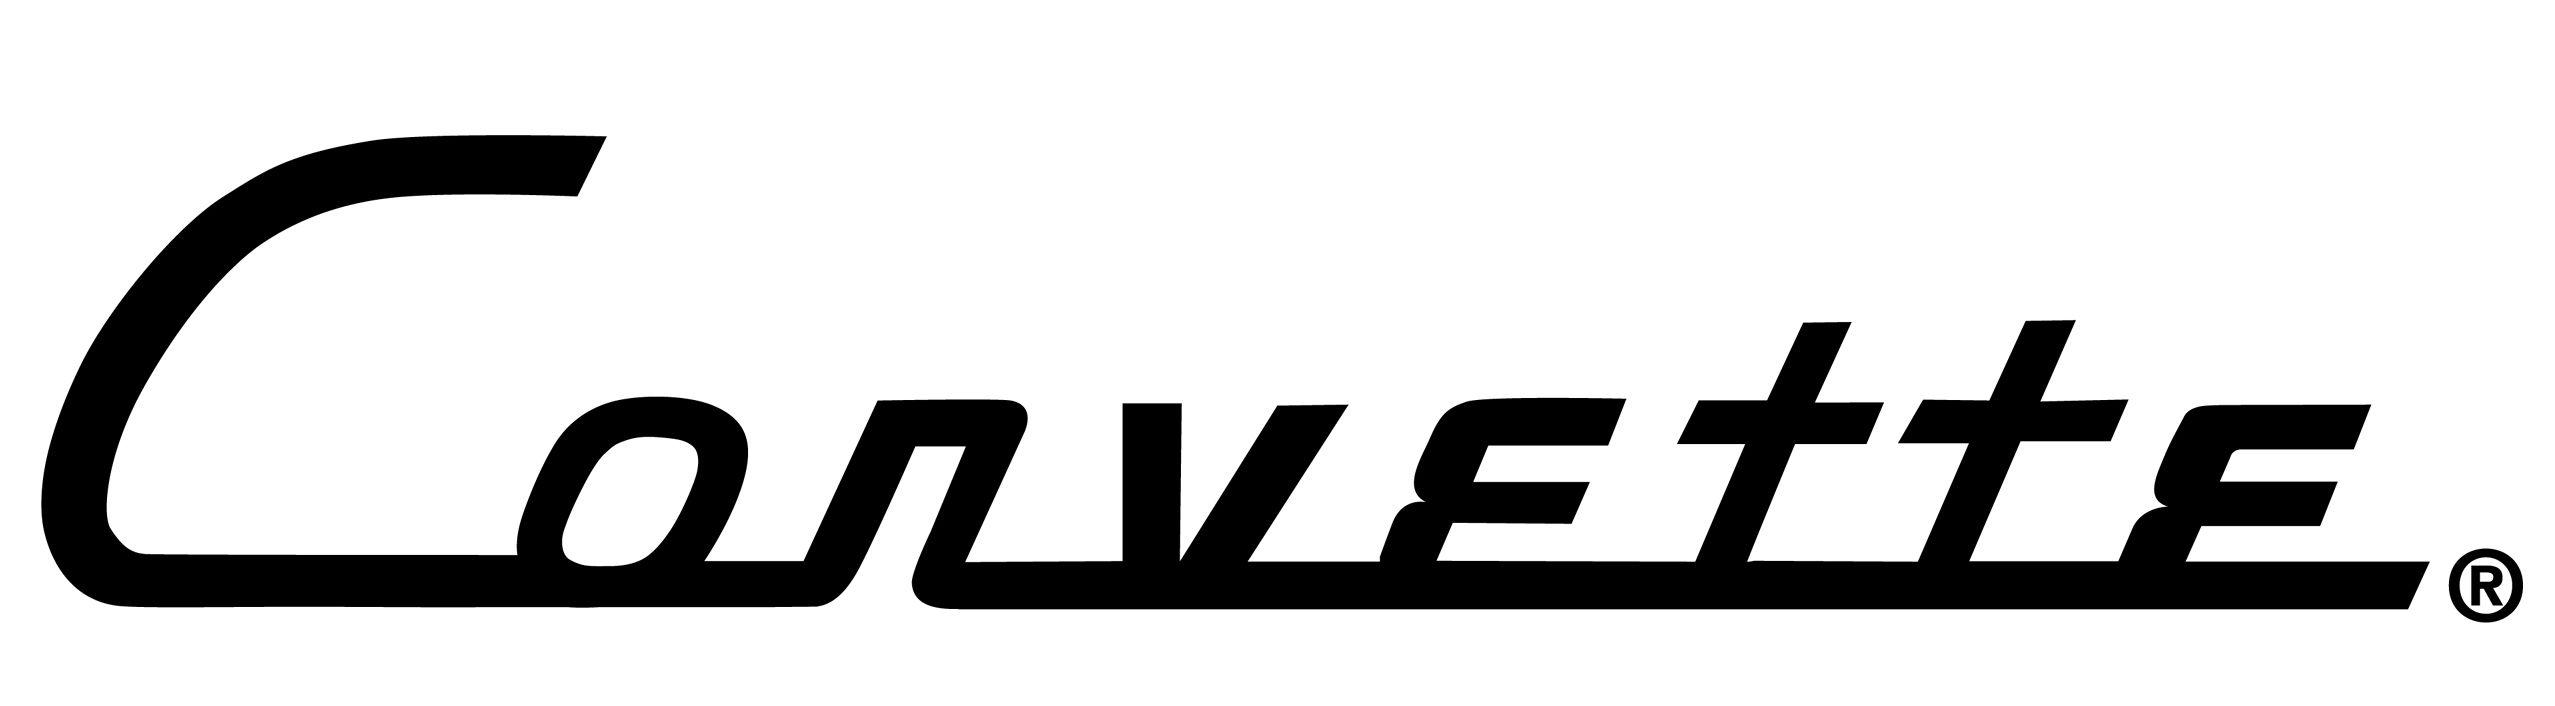 Corvette Old Logo - Todd Heathcote (toddheathcote) on Pinterest